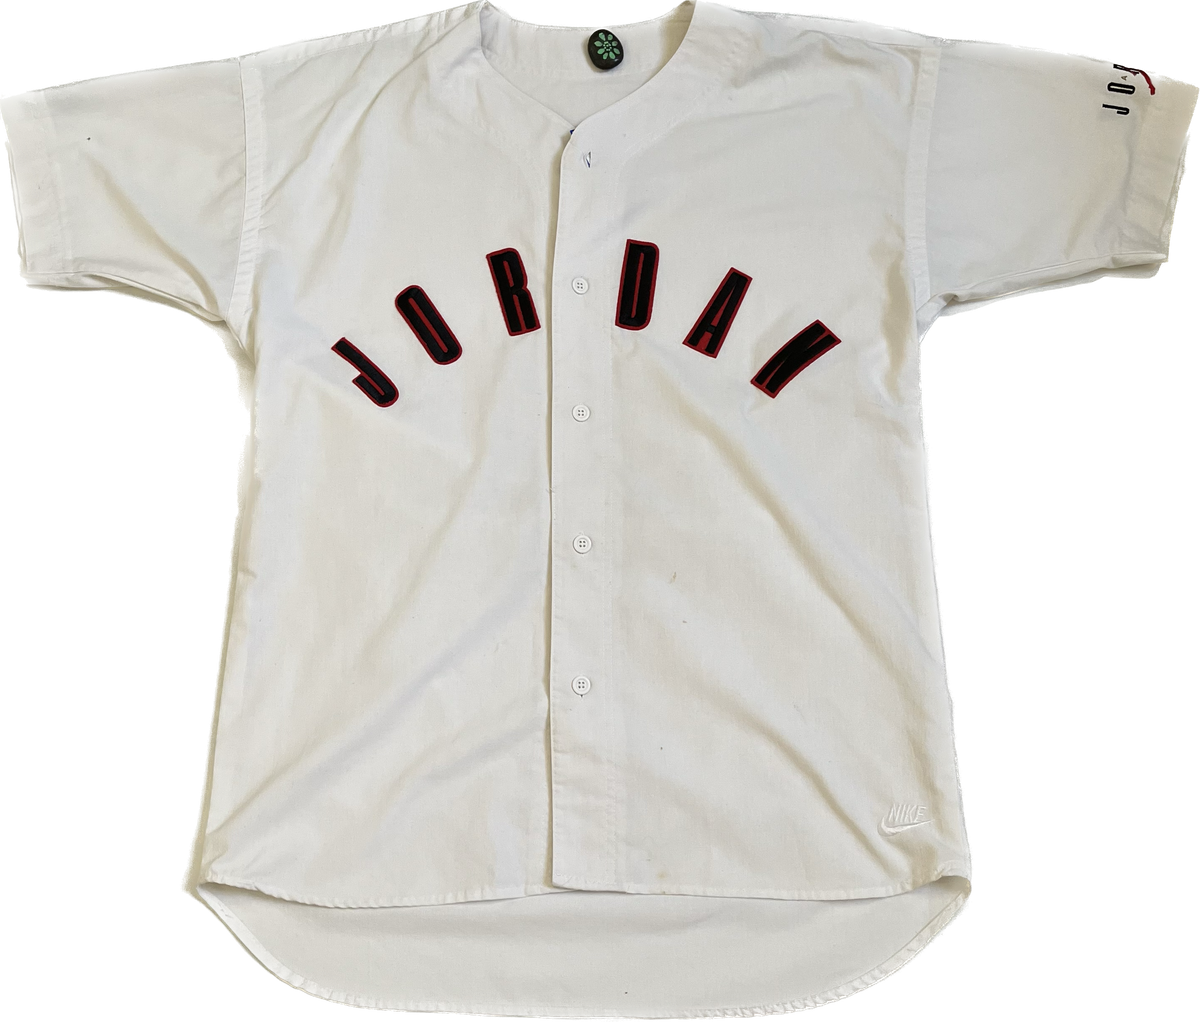 90’s Vintage Air Jordan Baseball Jersey